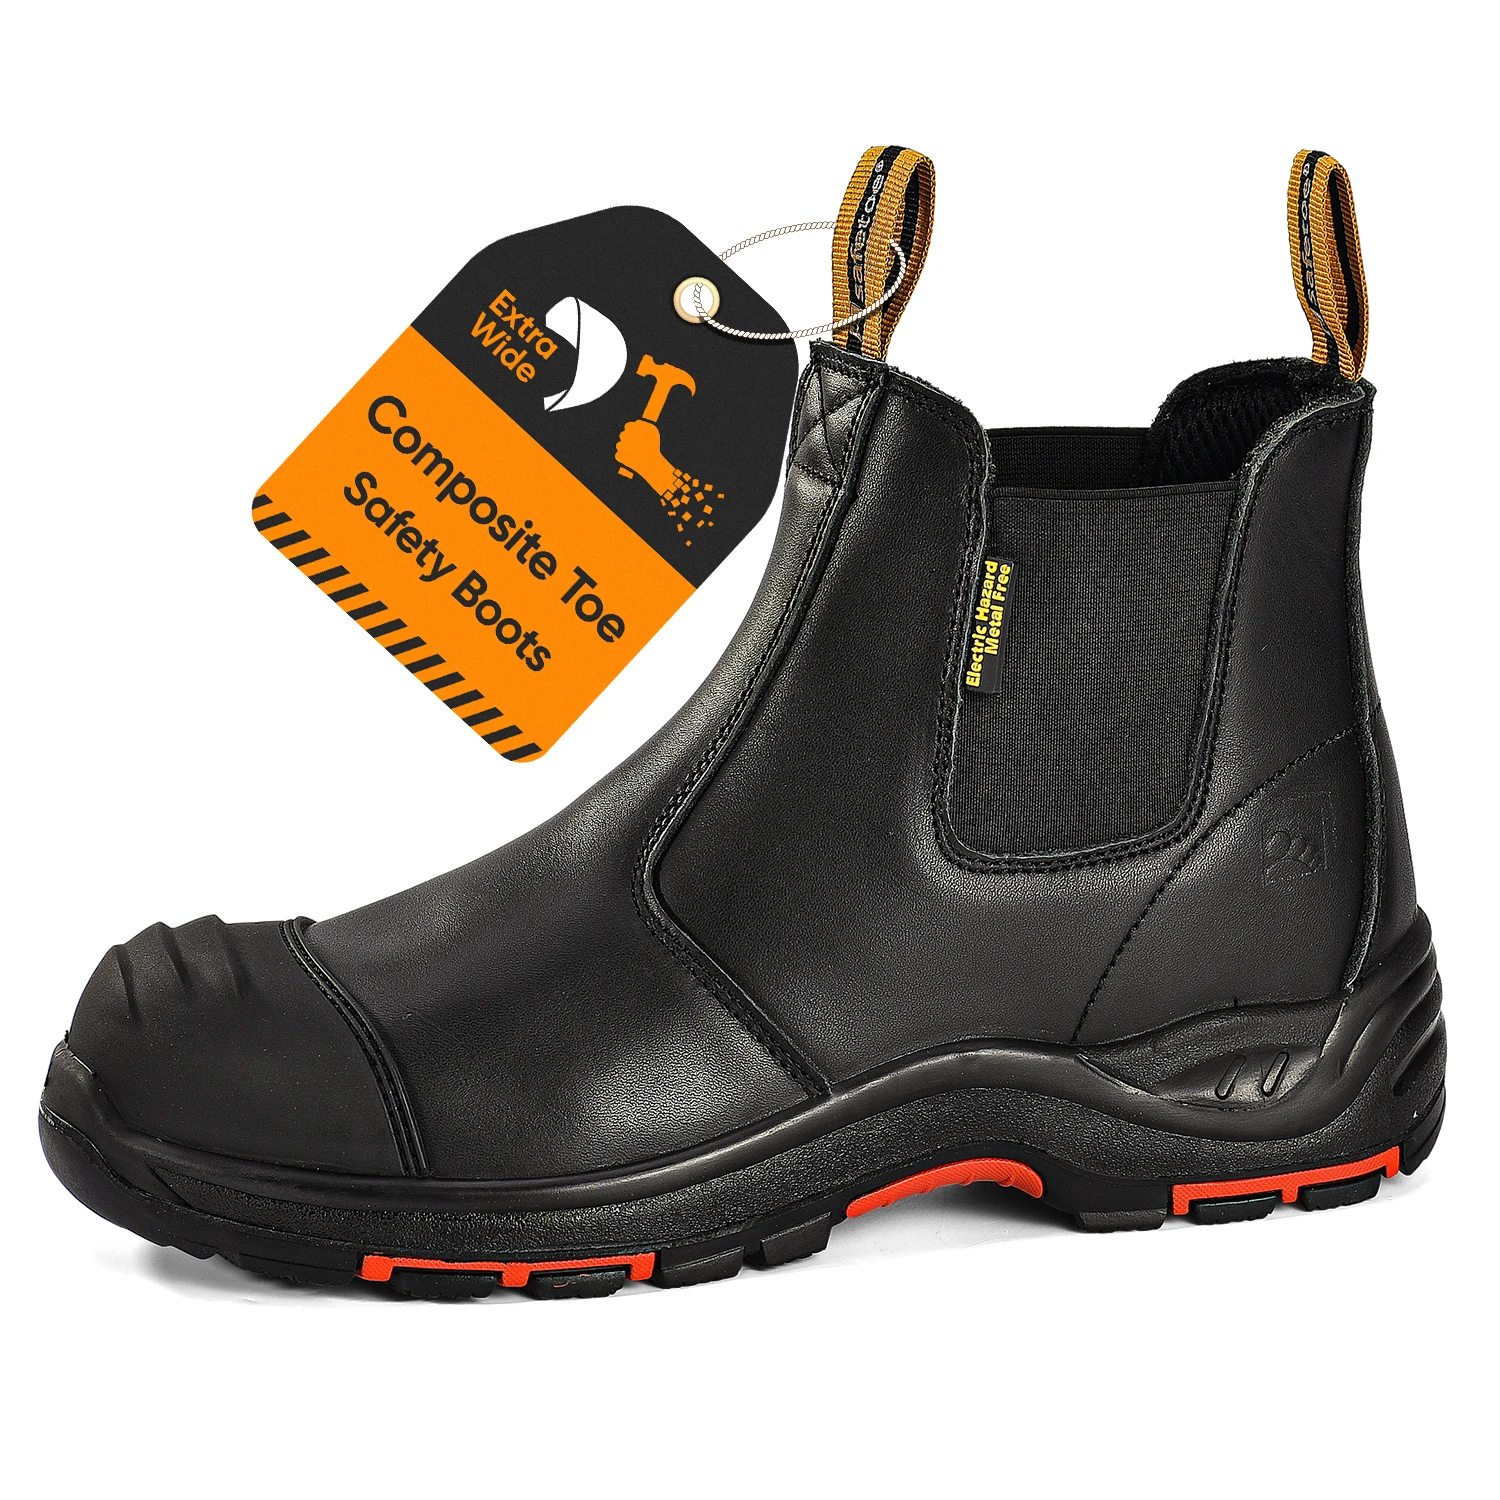 

SAFETOE Heavy Duty Men Safety Work Boots, S3 Black Site Dealer,Composite Toe Cap, LacelessSlip On Waterproof Leather,Gel Insole